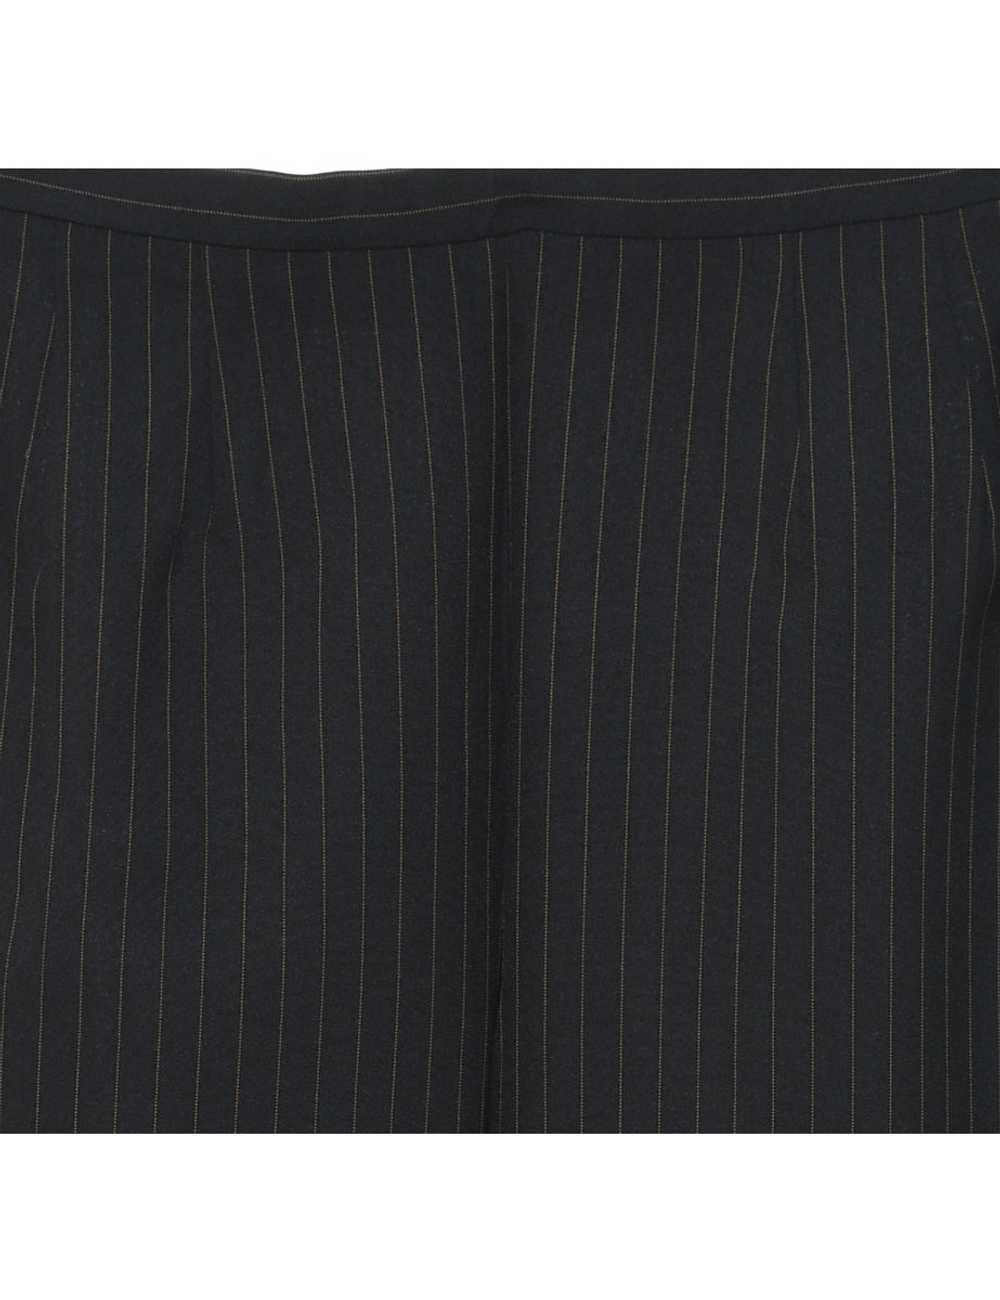 Black Pinstriped Trousers - W30 L27 - image 3